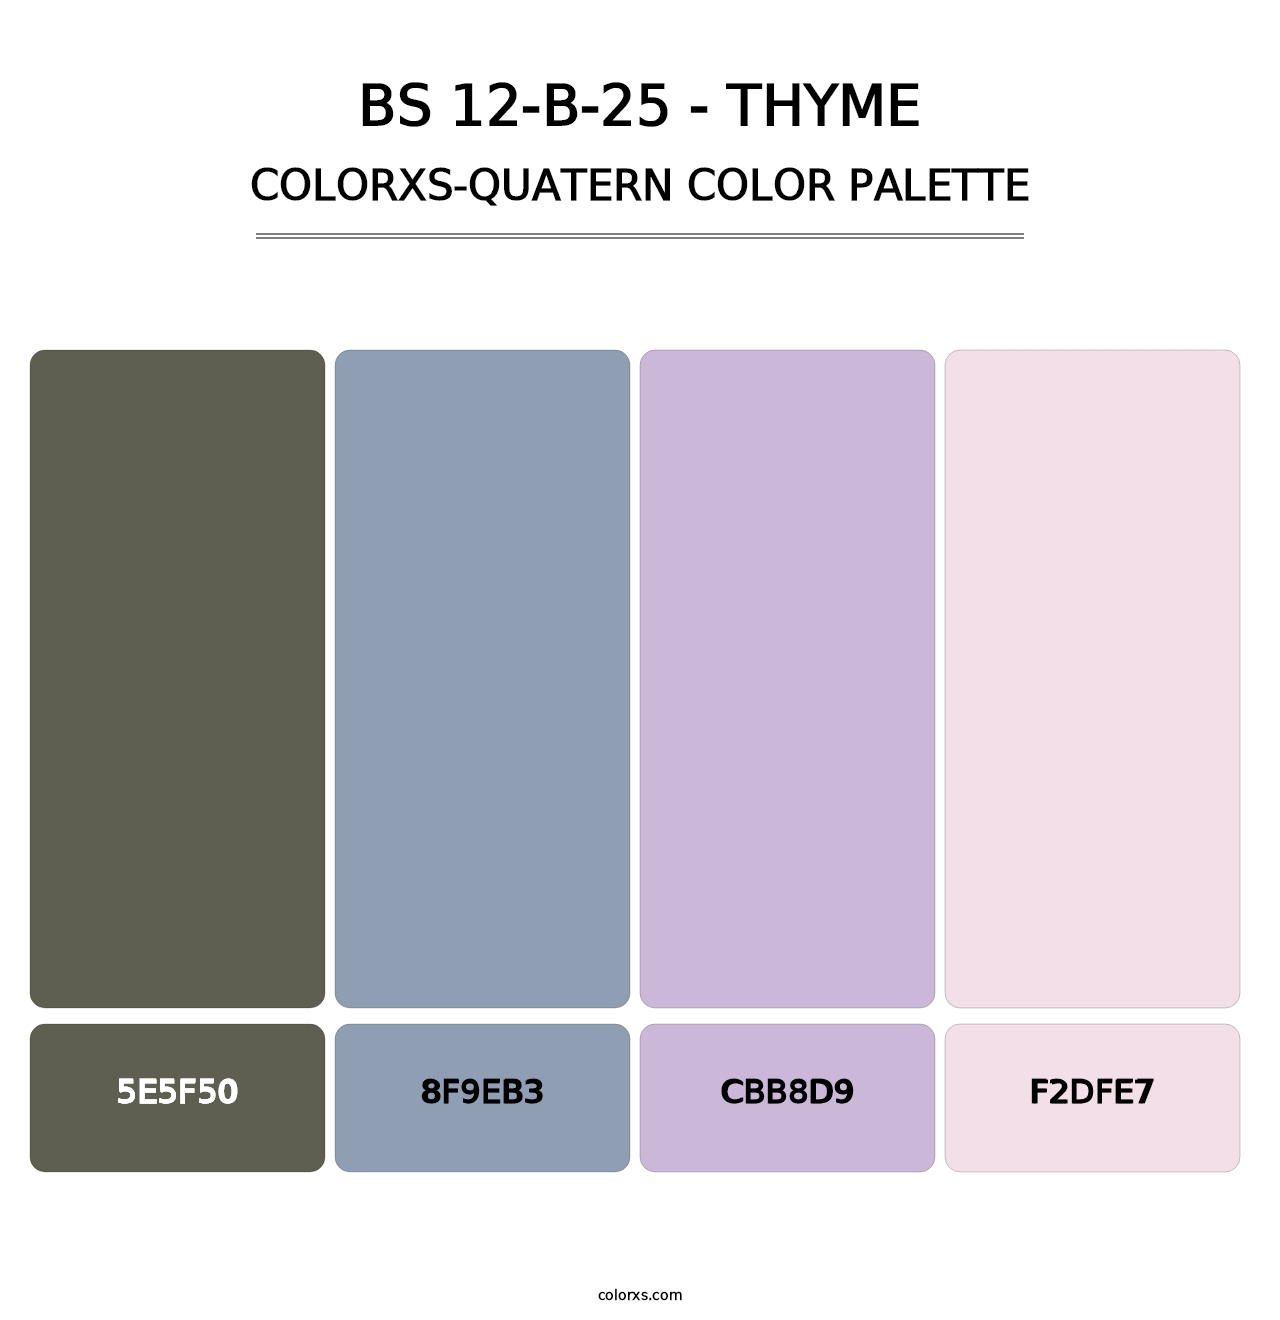 BS 12-B-25 - Thyme - Colorxs Quatern Palette